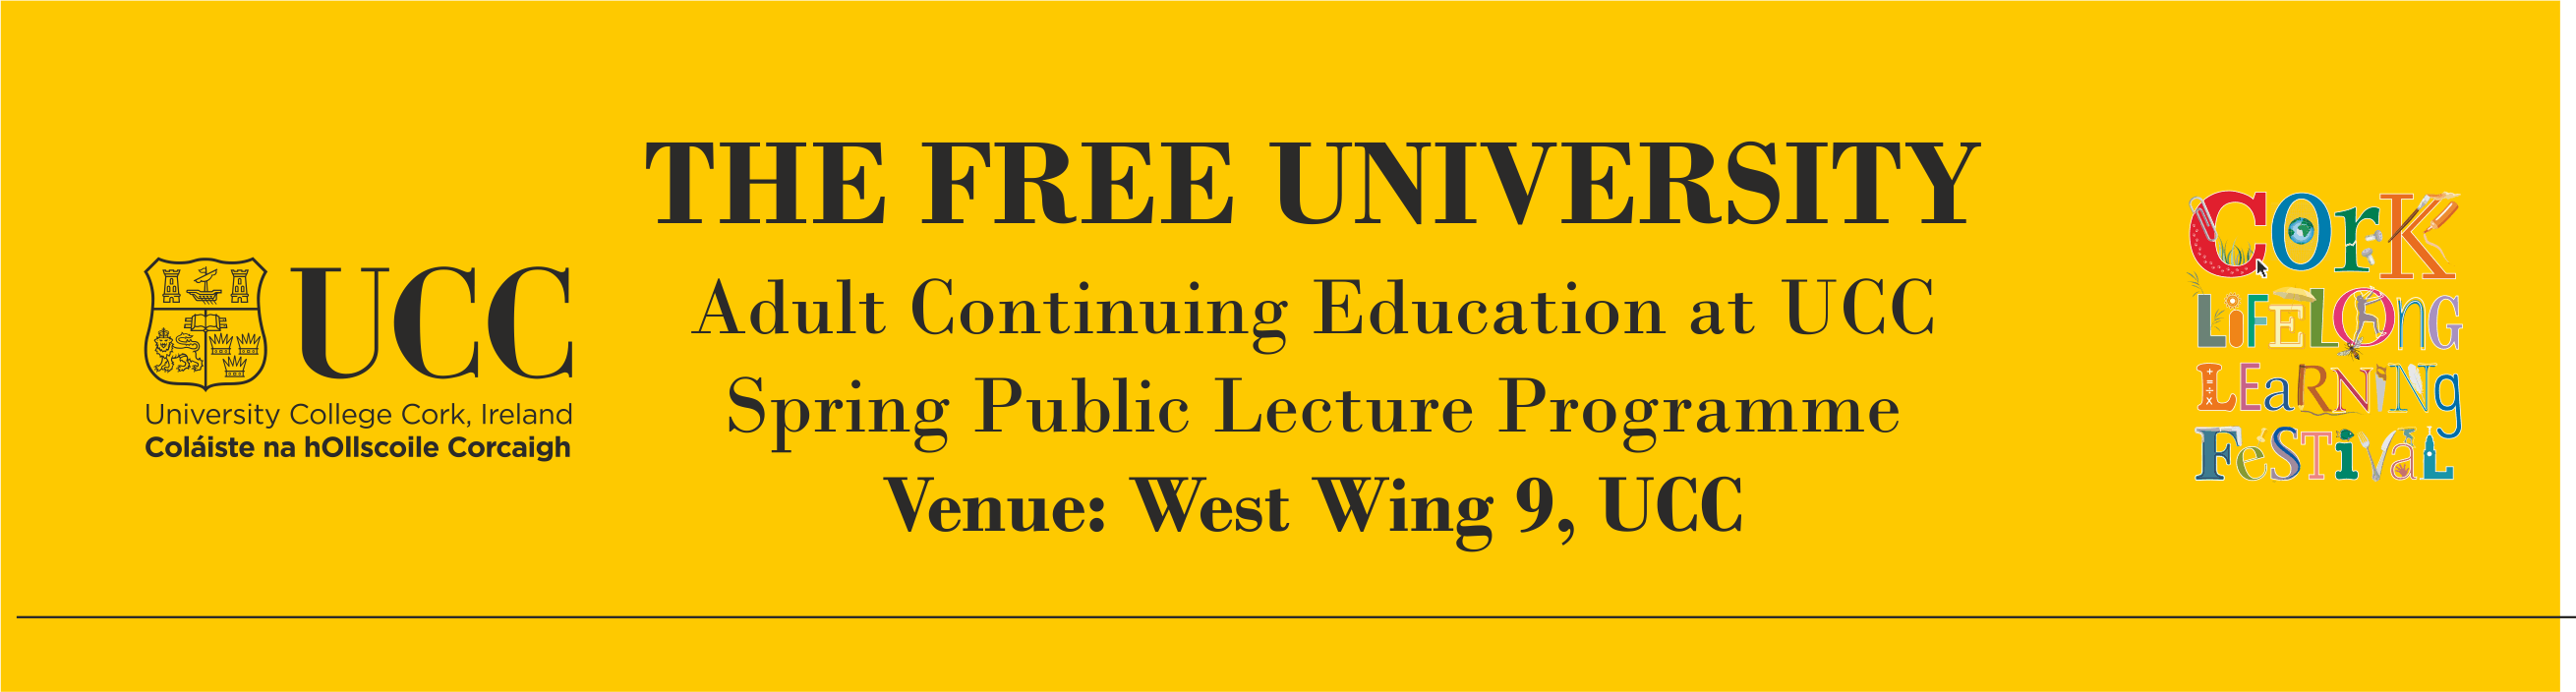 The Free University - Lifelong Learning Festival